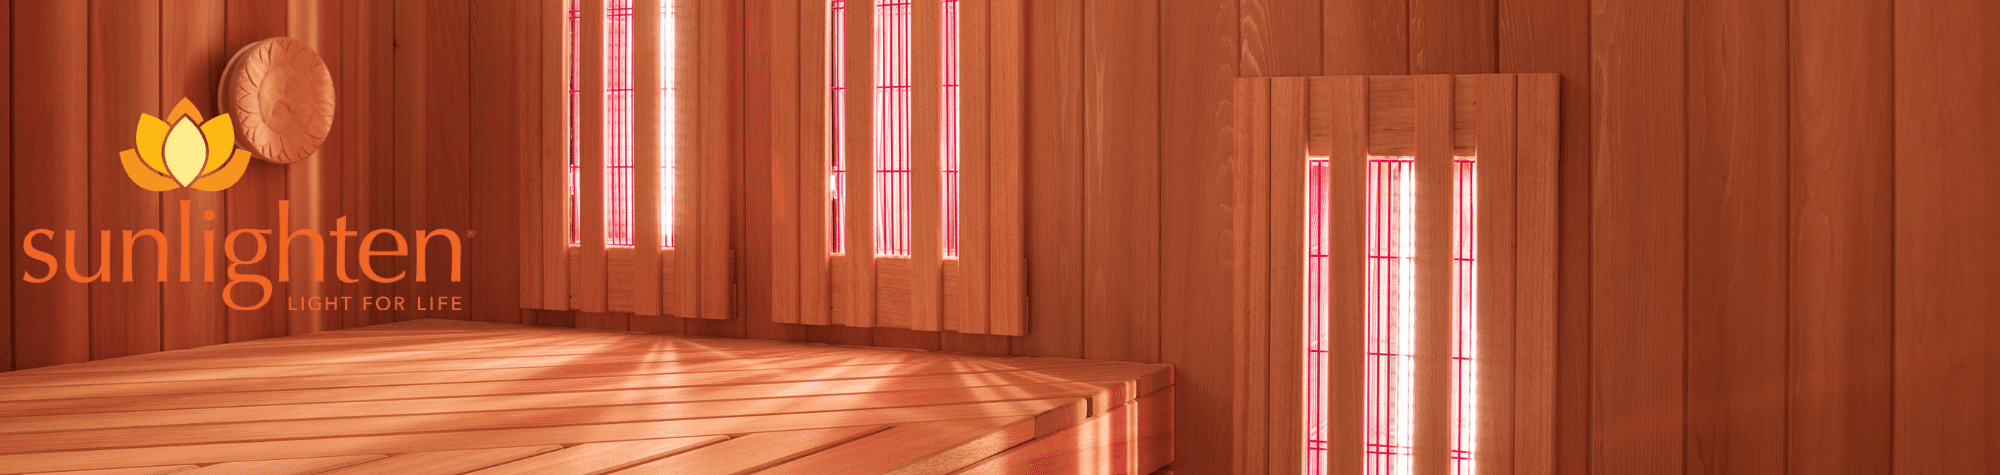 Sunlighten Infrared Sauna therapy is here!